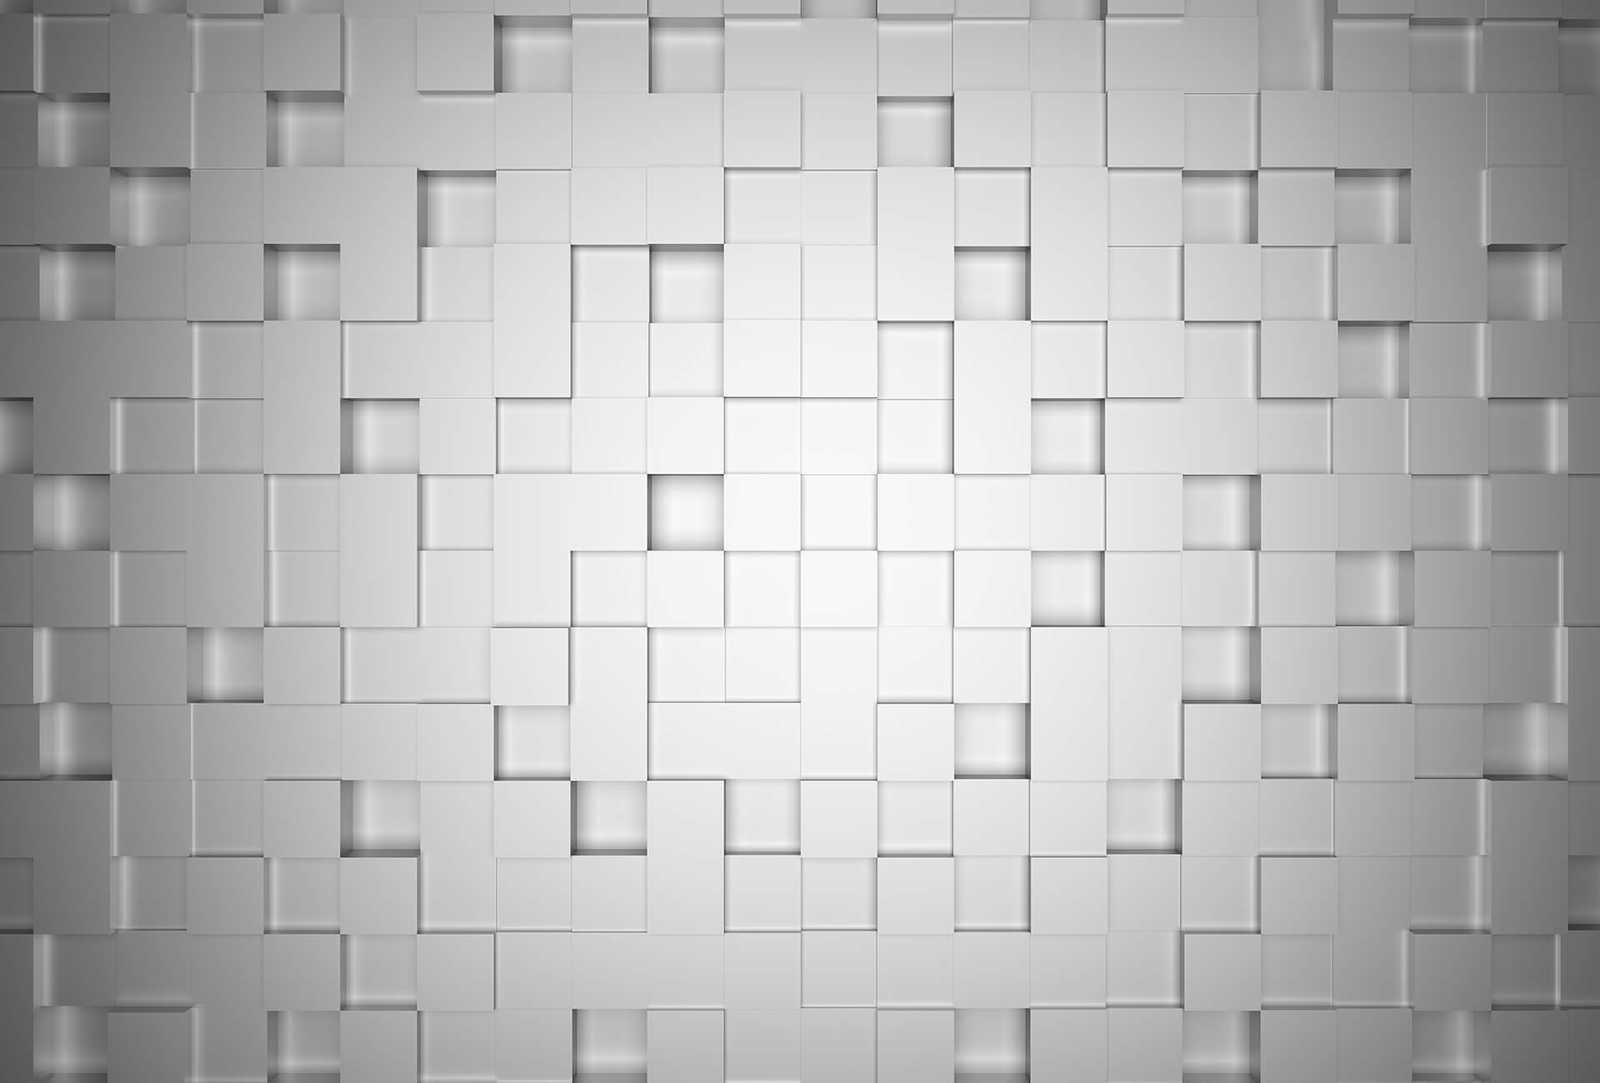         3D Graphic Design & Cube Pattern Wallpaper - White
    